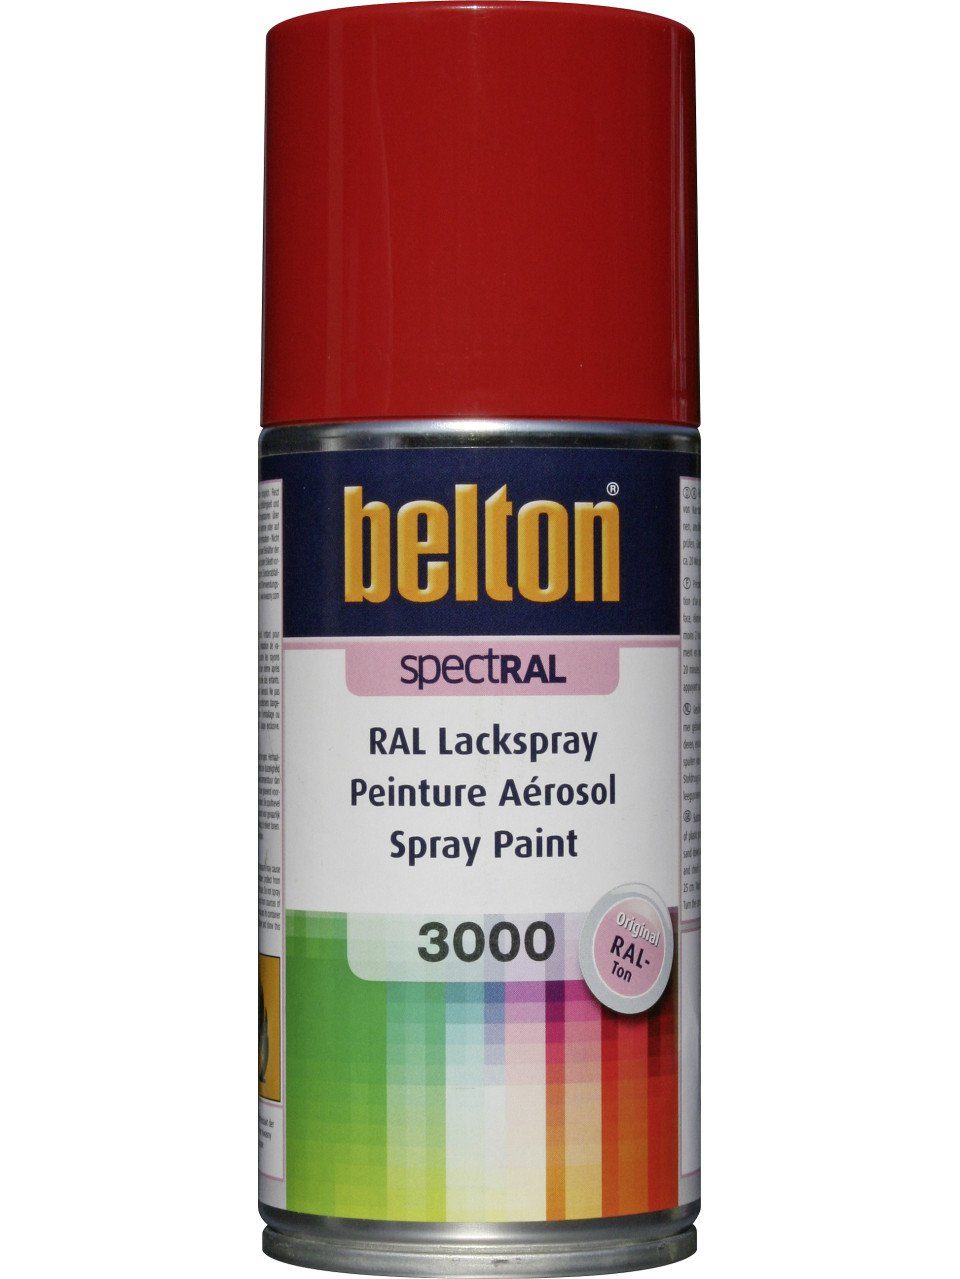 150 belton Spectral Belton ml feuerrot Lackspray Sprühlack